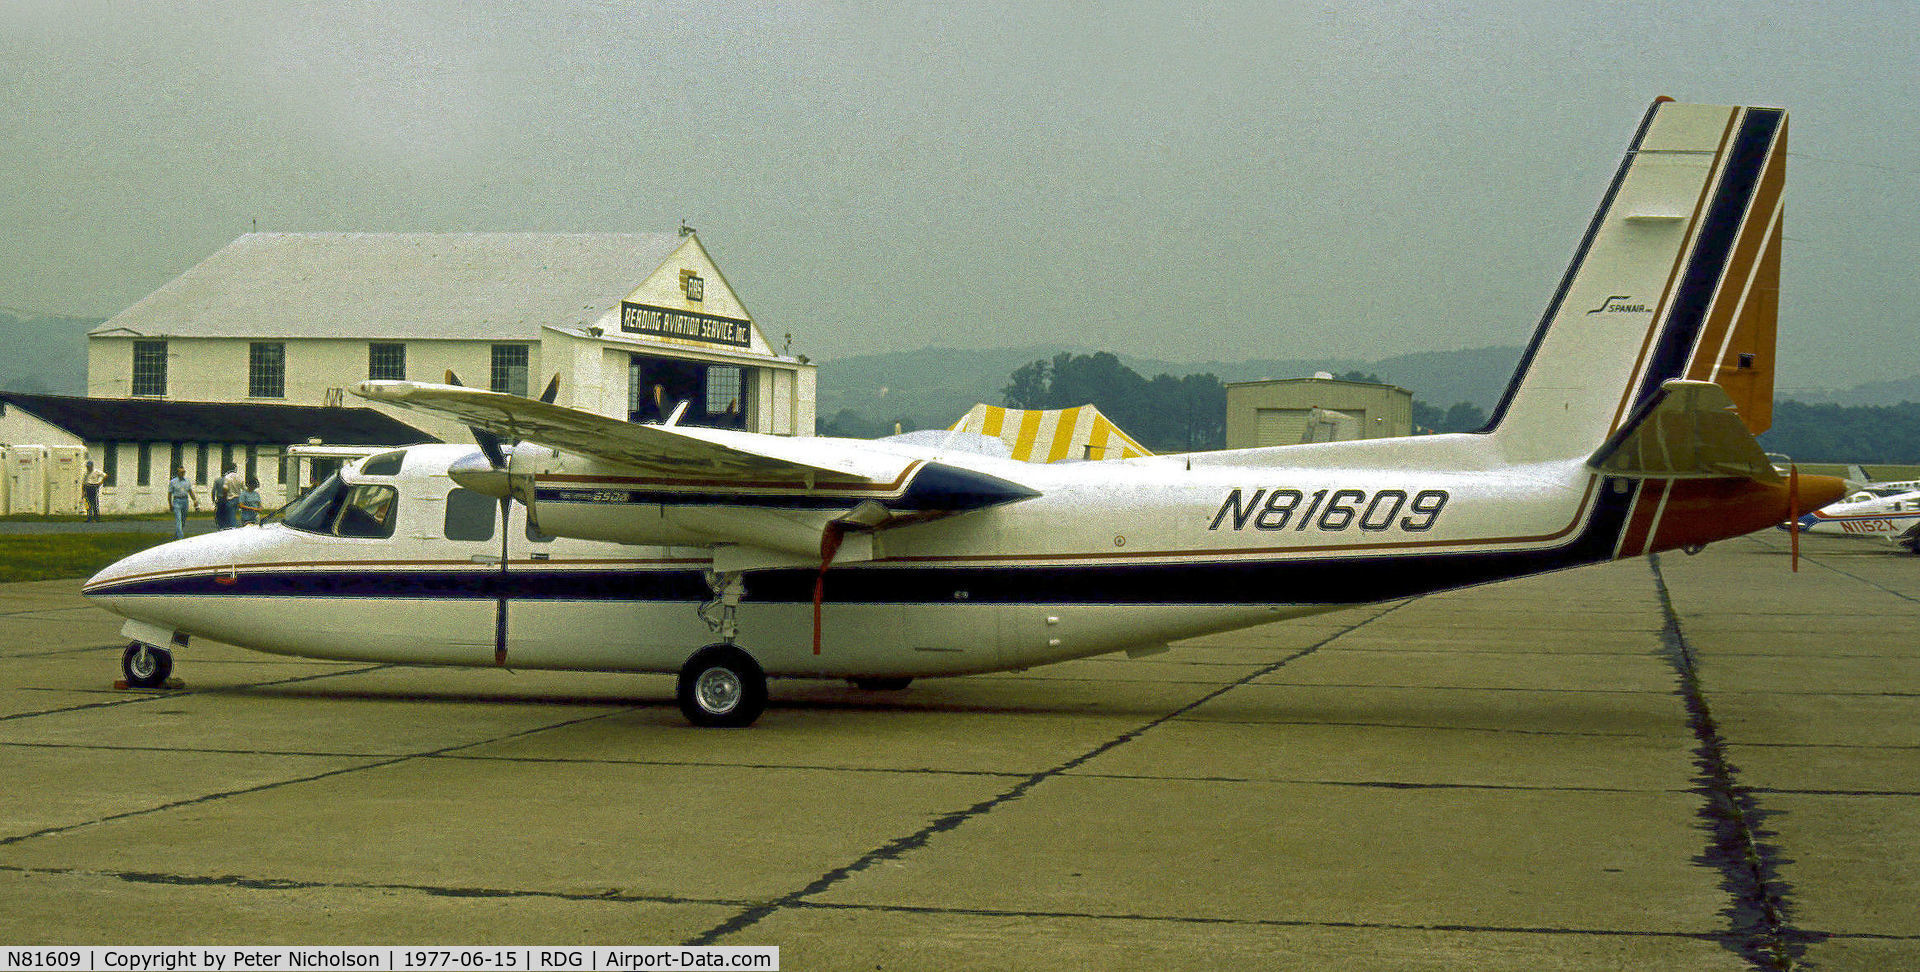 N81609, 1977 Rockwell International 690B C/N 11387, Turbo Commander 690B on display at the 1977 Reading Airshow.